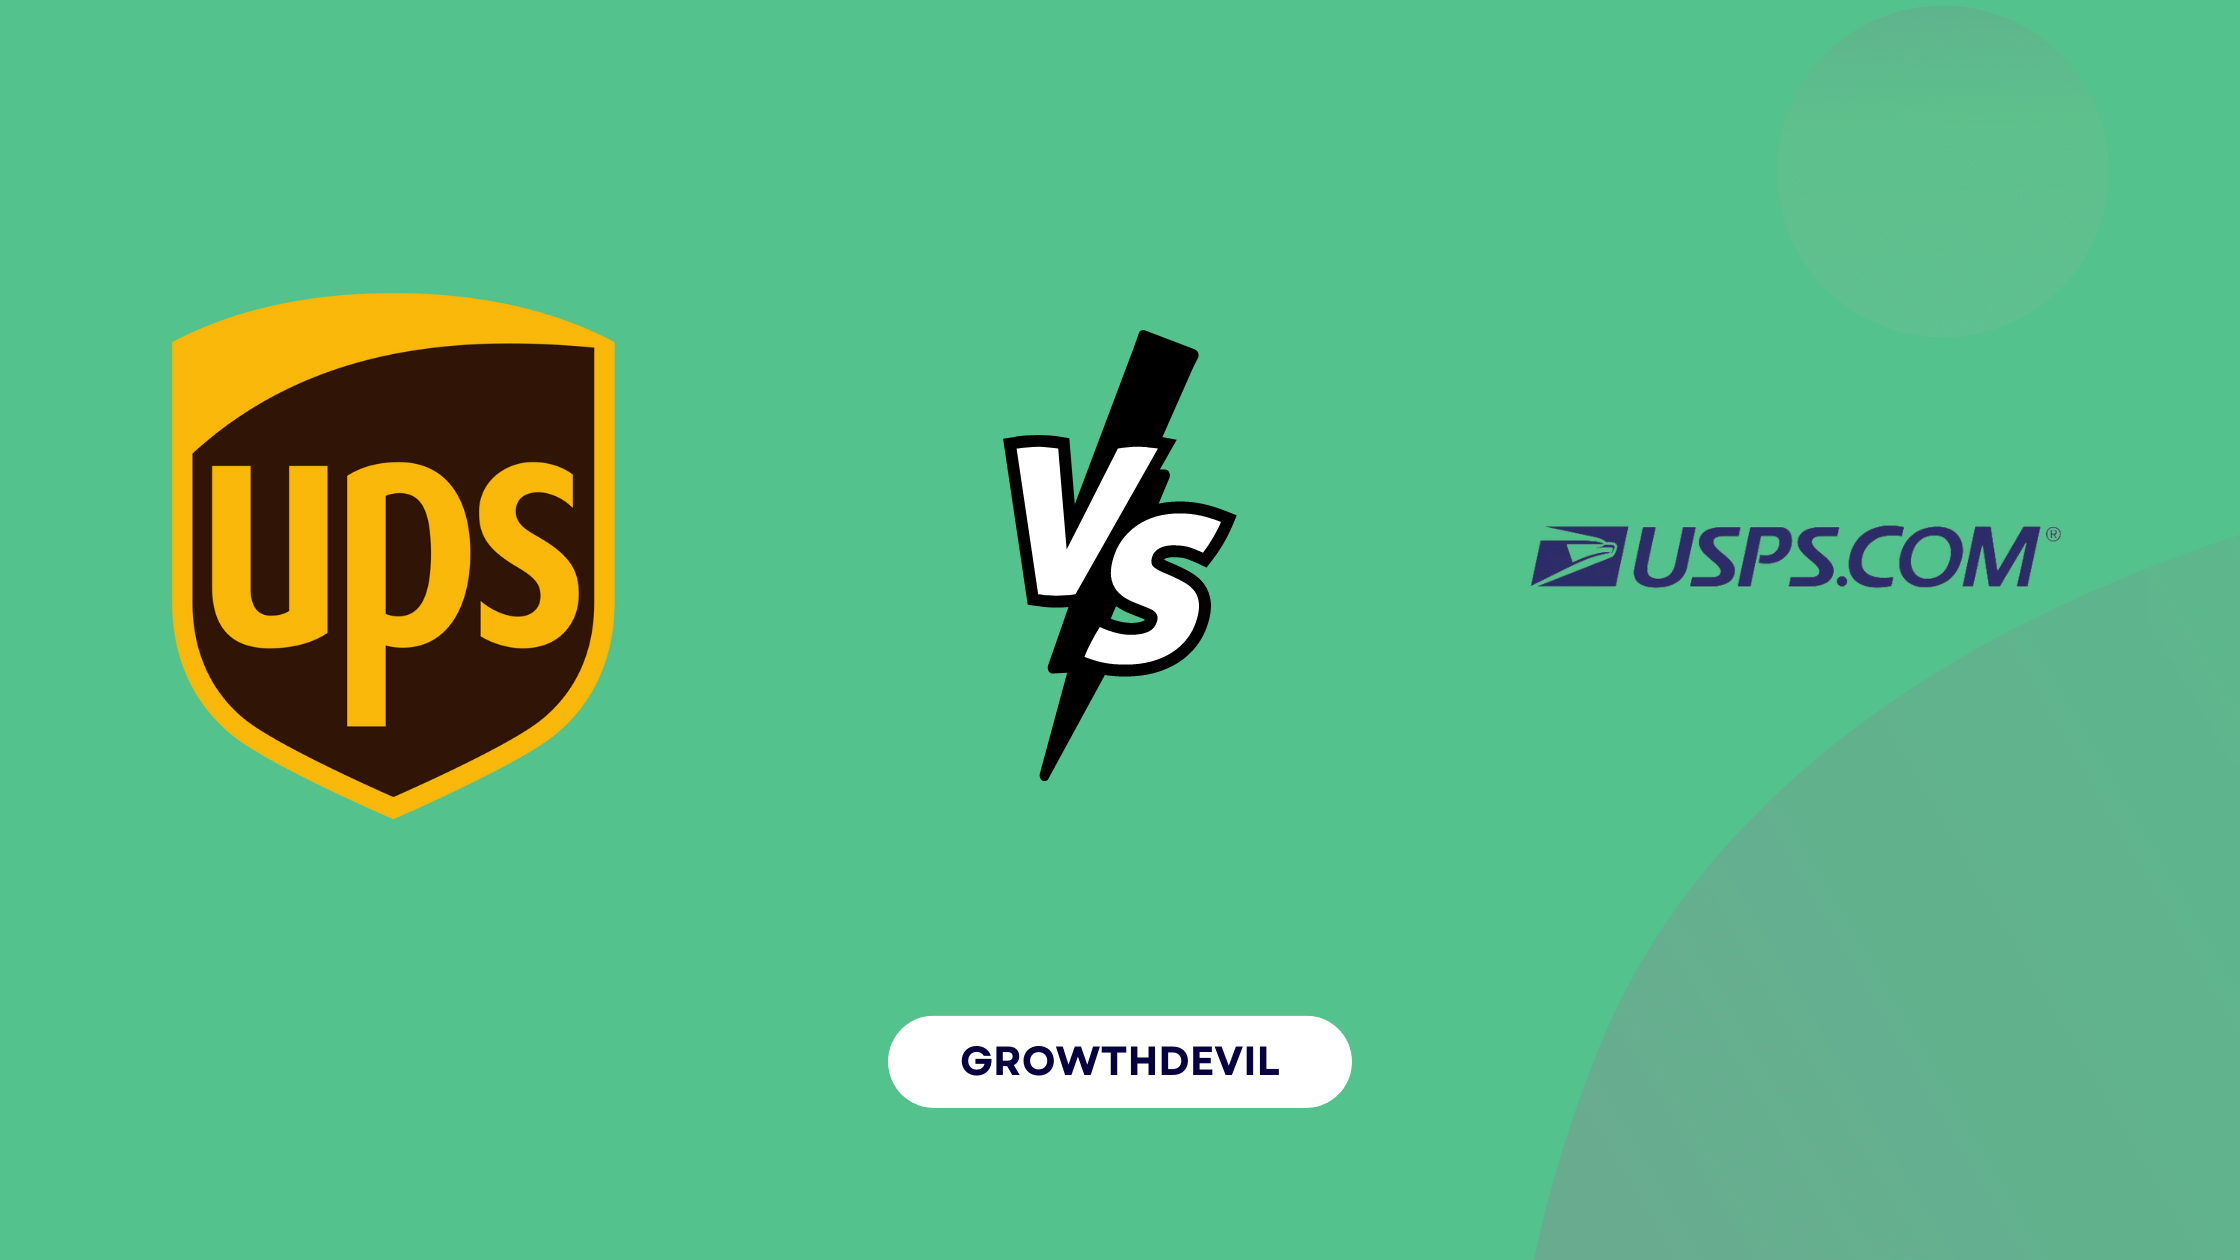 UPS vs USPS - GrowthDevil